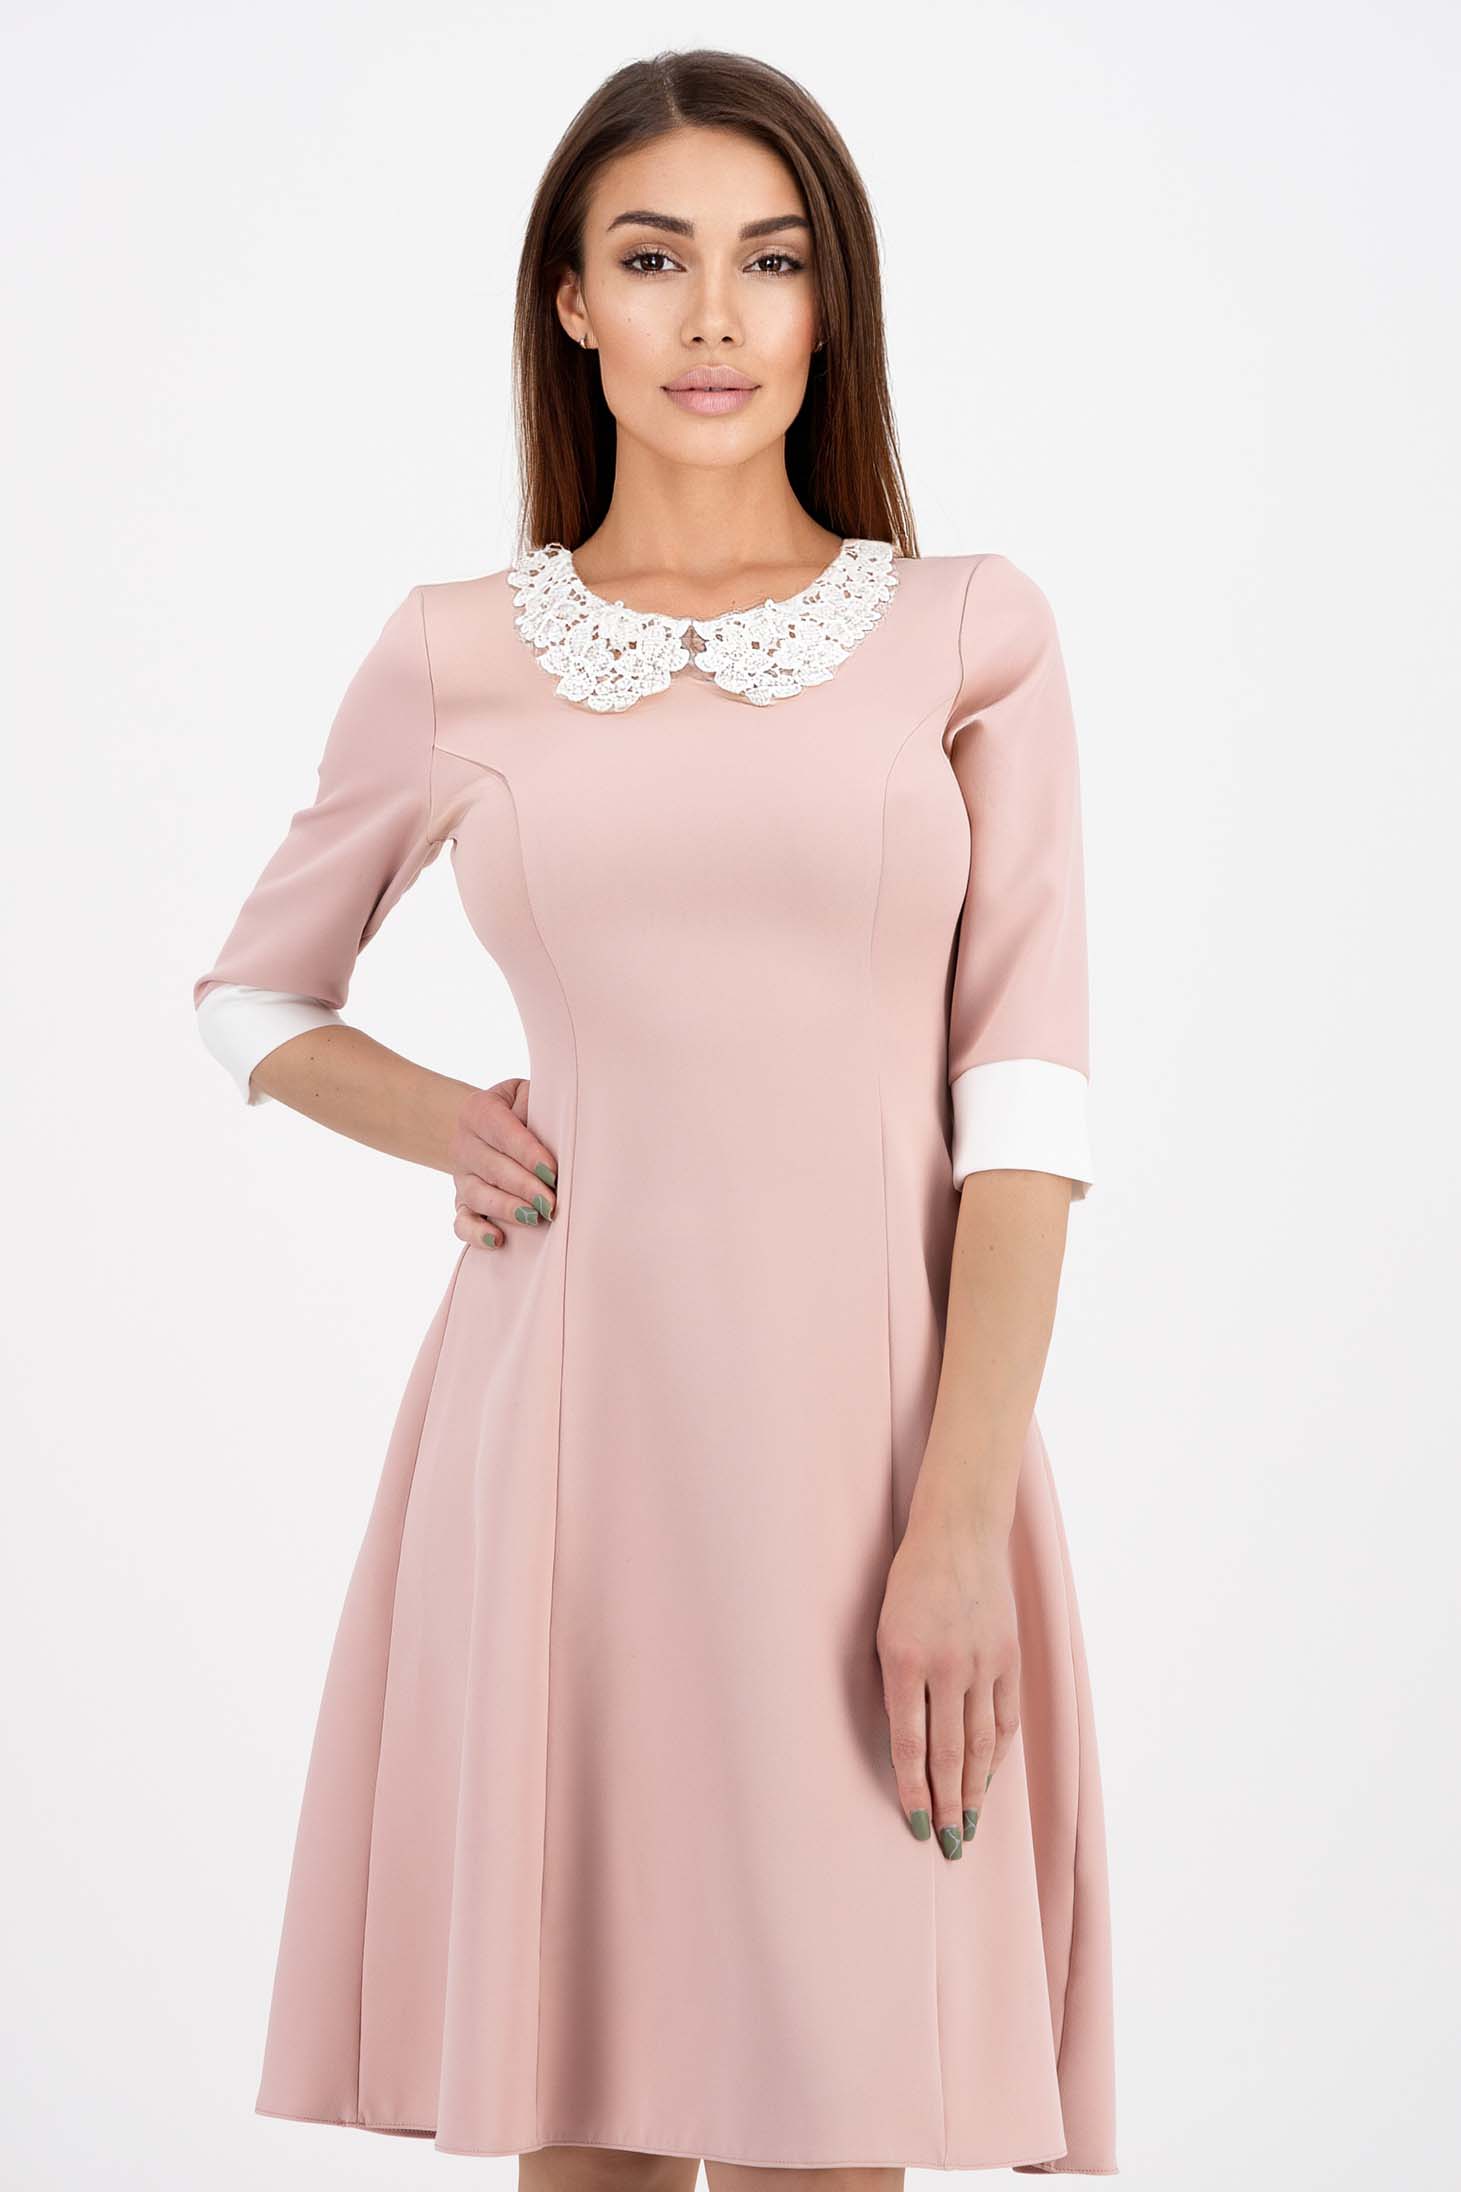 Rochie din stofa usor elastica roz pudra in clos cu guler decorativ - StarShinerS 1 - StarShinerS.ro